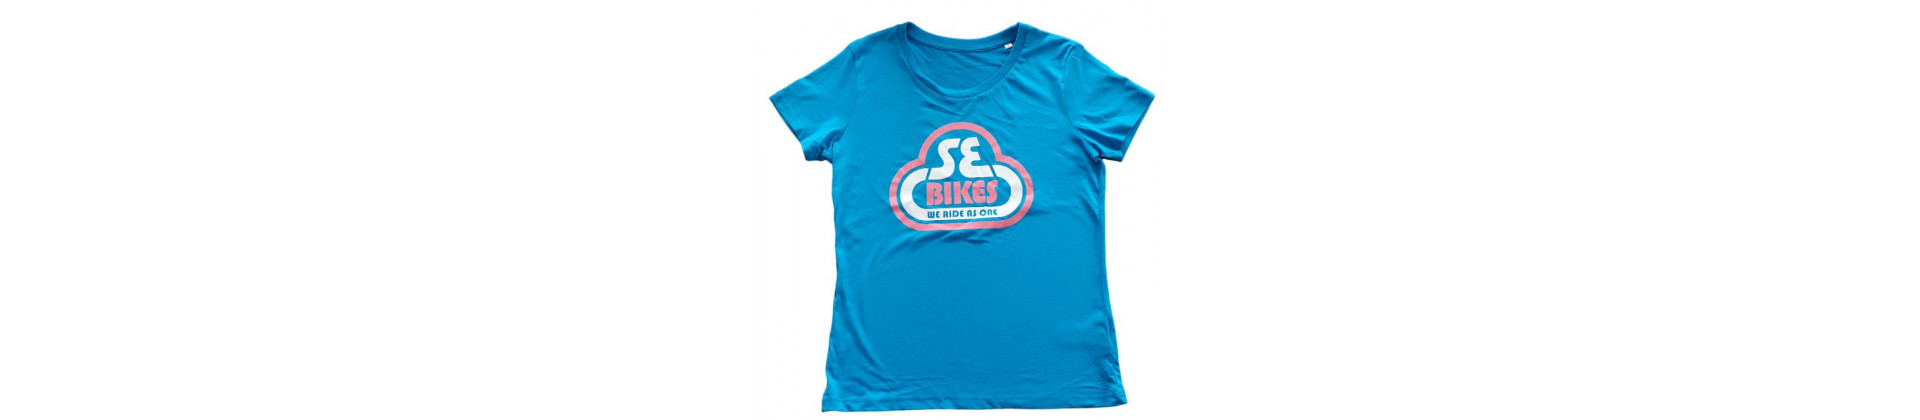 Bike t shirt